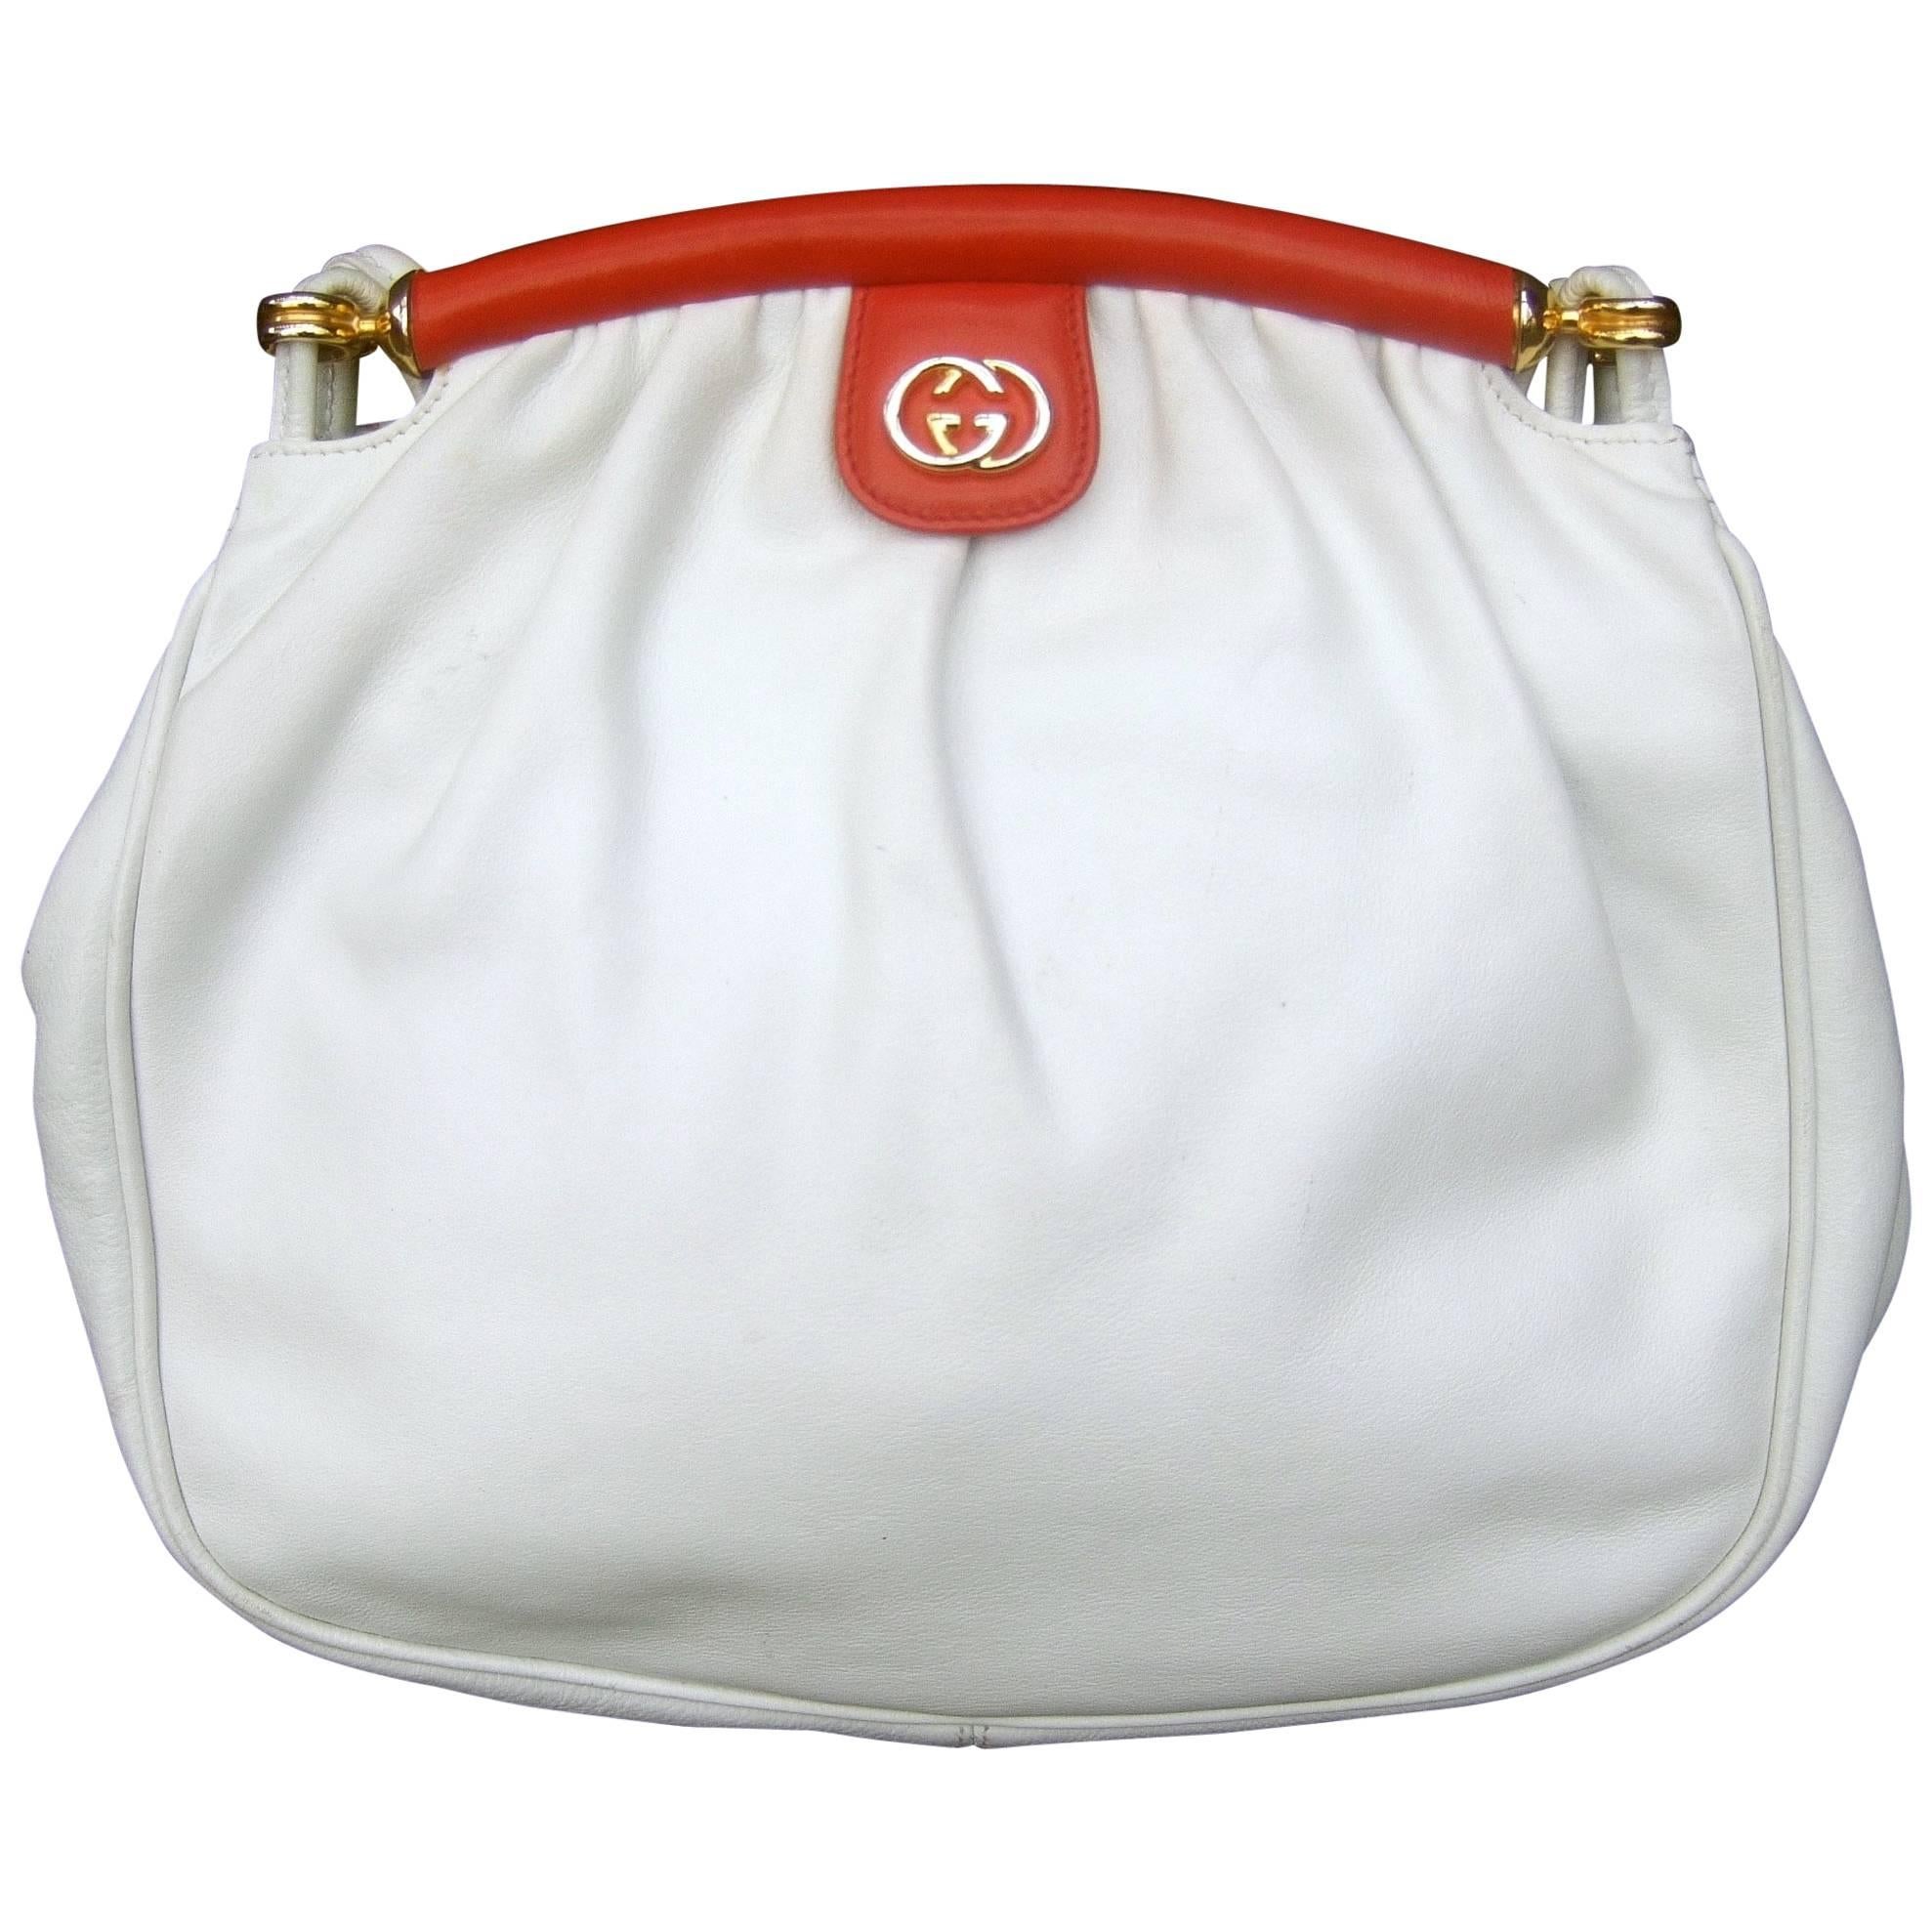 Gucci Italy Crisp White Leather Versatile Shoulder Bag c 1980s